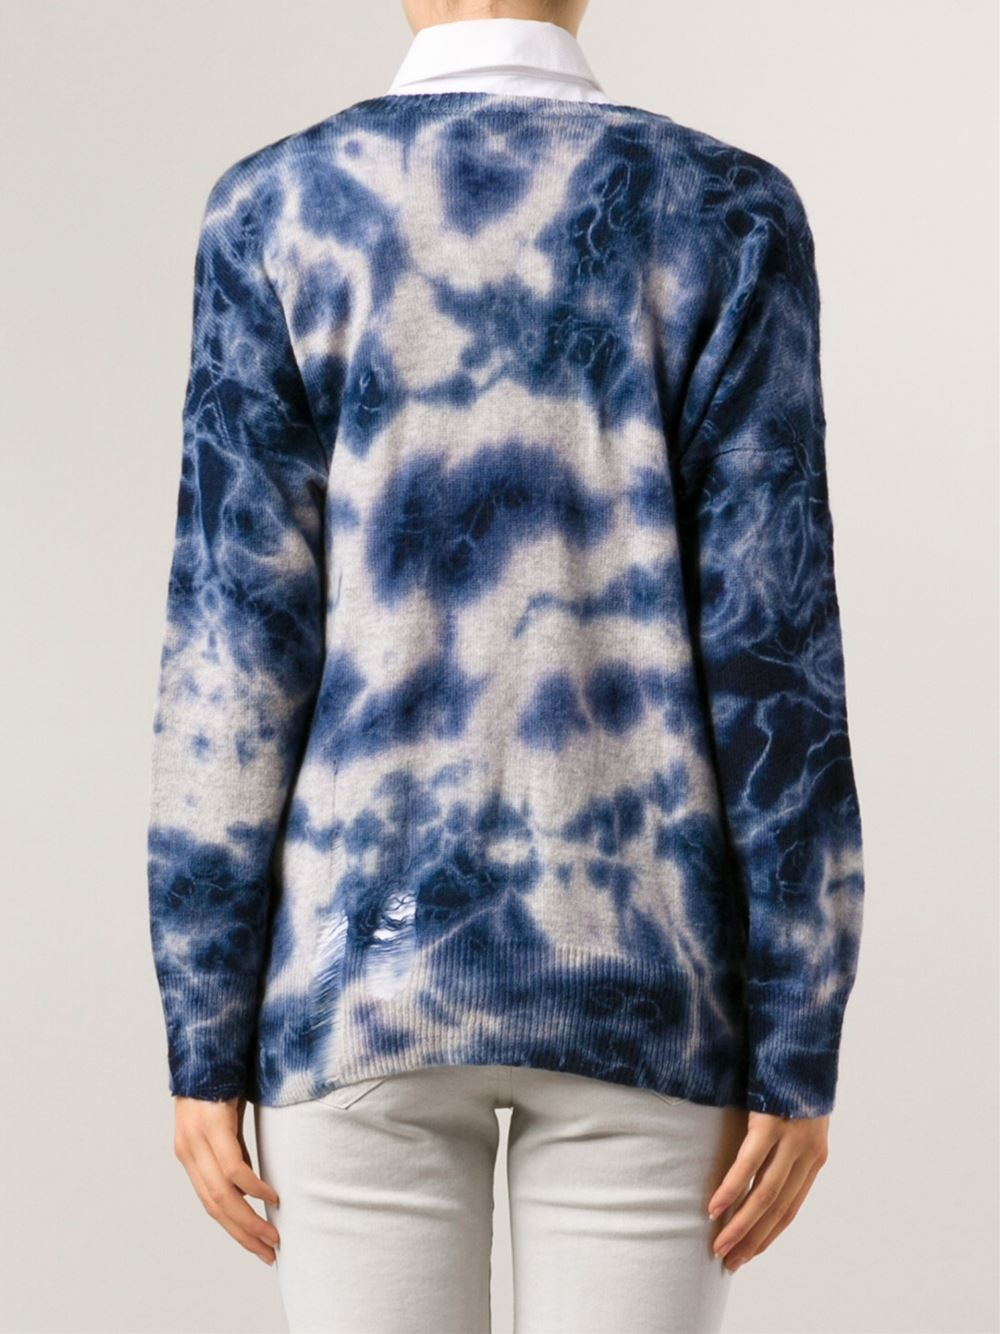 Lyst - Raquel Allegra Slouchy Pullover Sweater in Blue